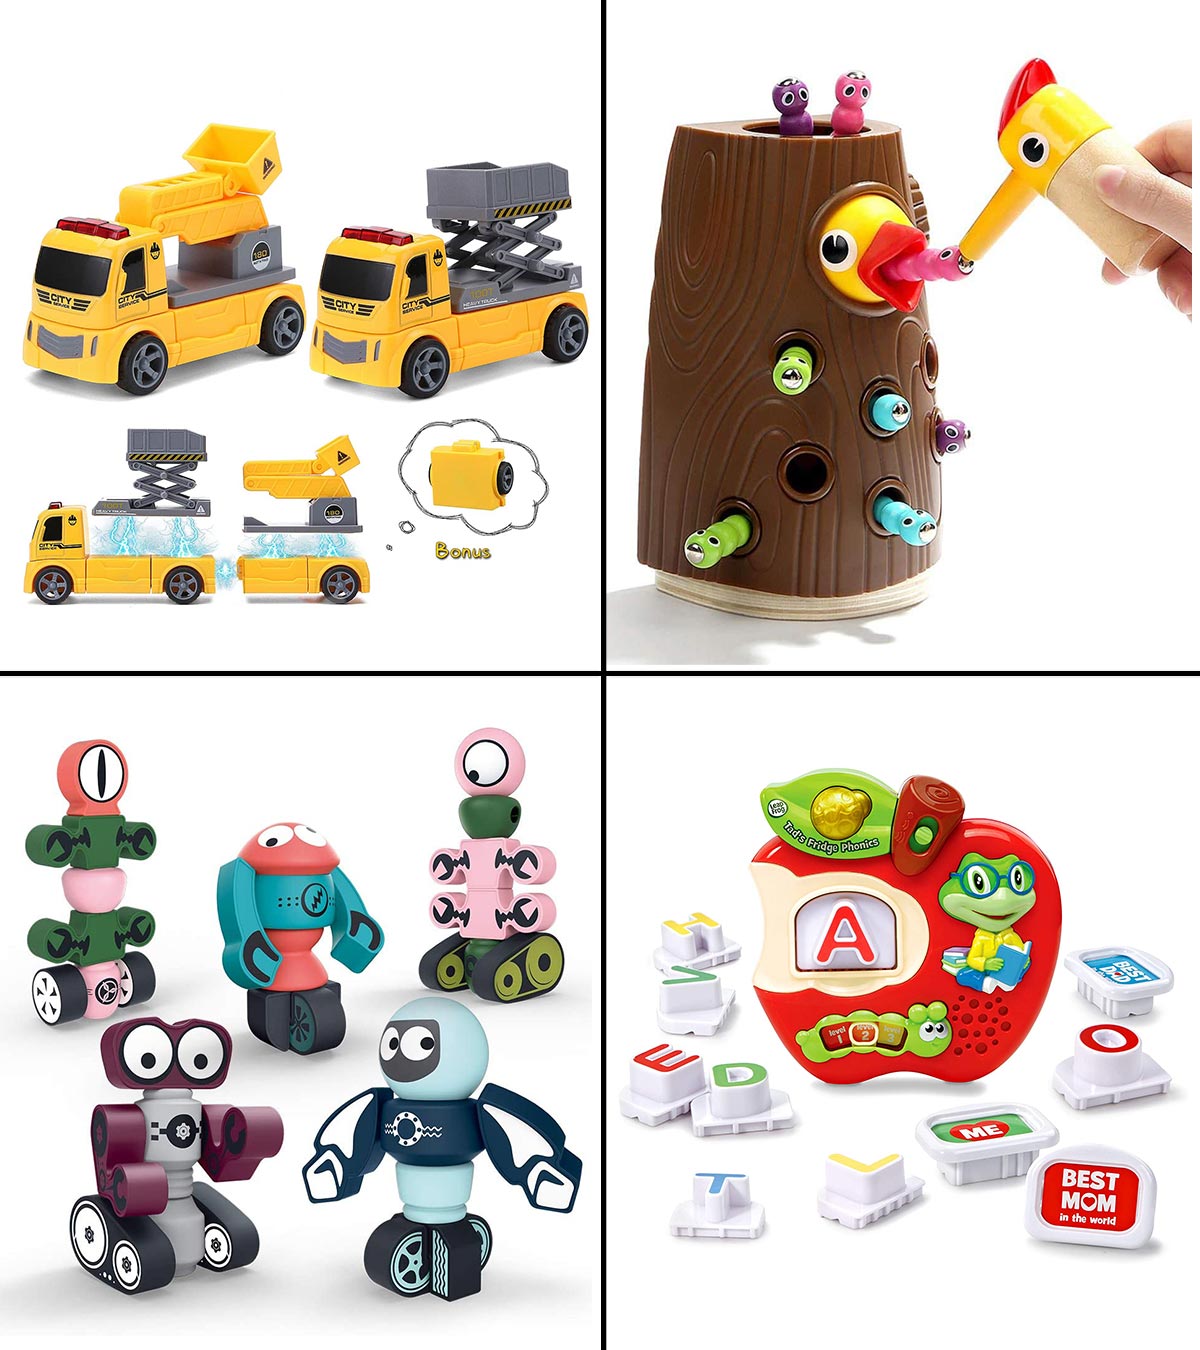 LATI Magnetic Blocks Kids Magnet Toys 68 PCS Magnetic Tiles Set 3D Educational Toys for Toddler Boys Girls Ages 3 4 5 6 7 8 9 10 Construction Building Blocks Toy Building Sets Kids Toys with 1 Car 